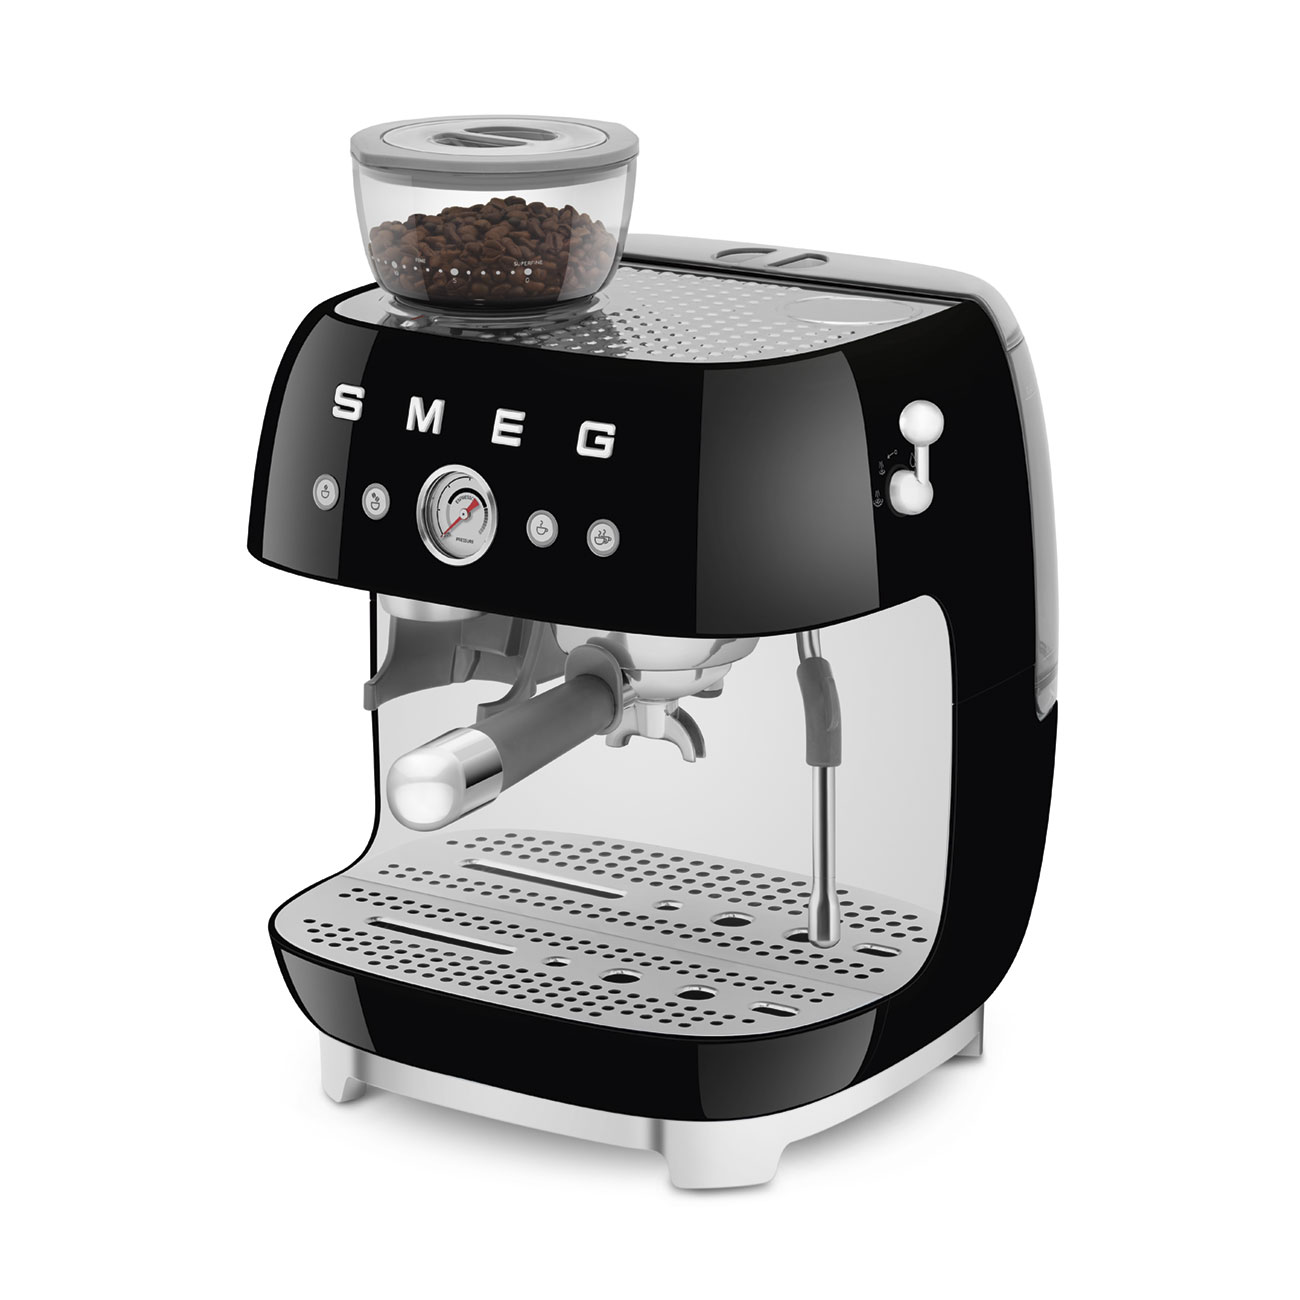 Smeg Black Espresso Manual Coffee Machine with Grinder_9